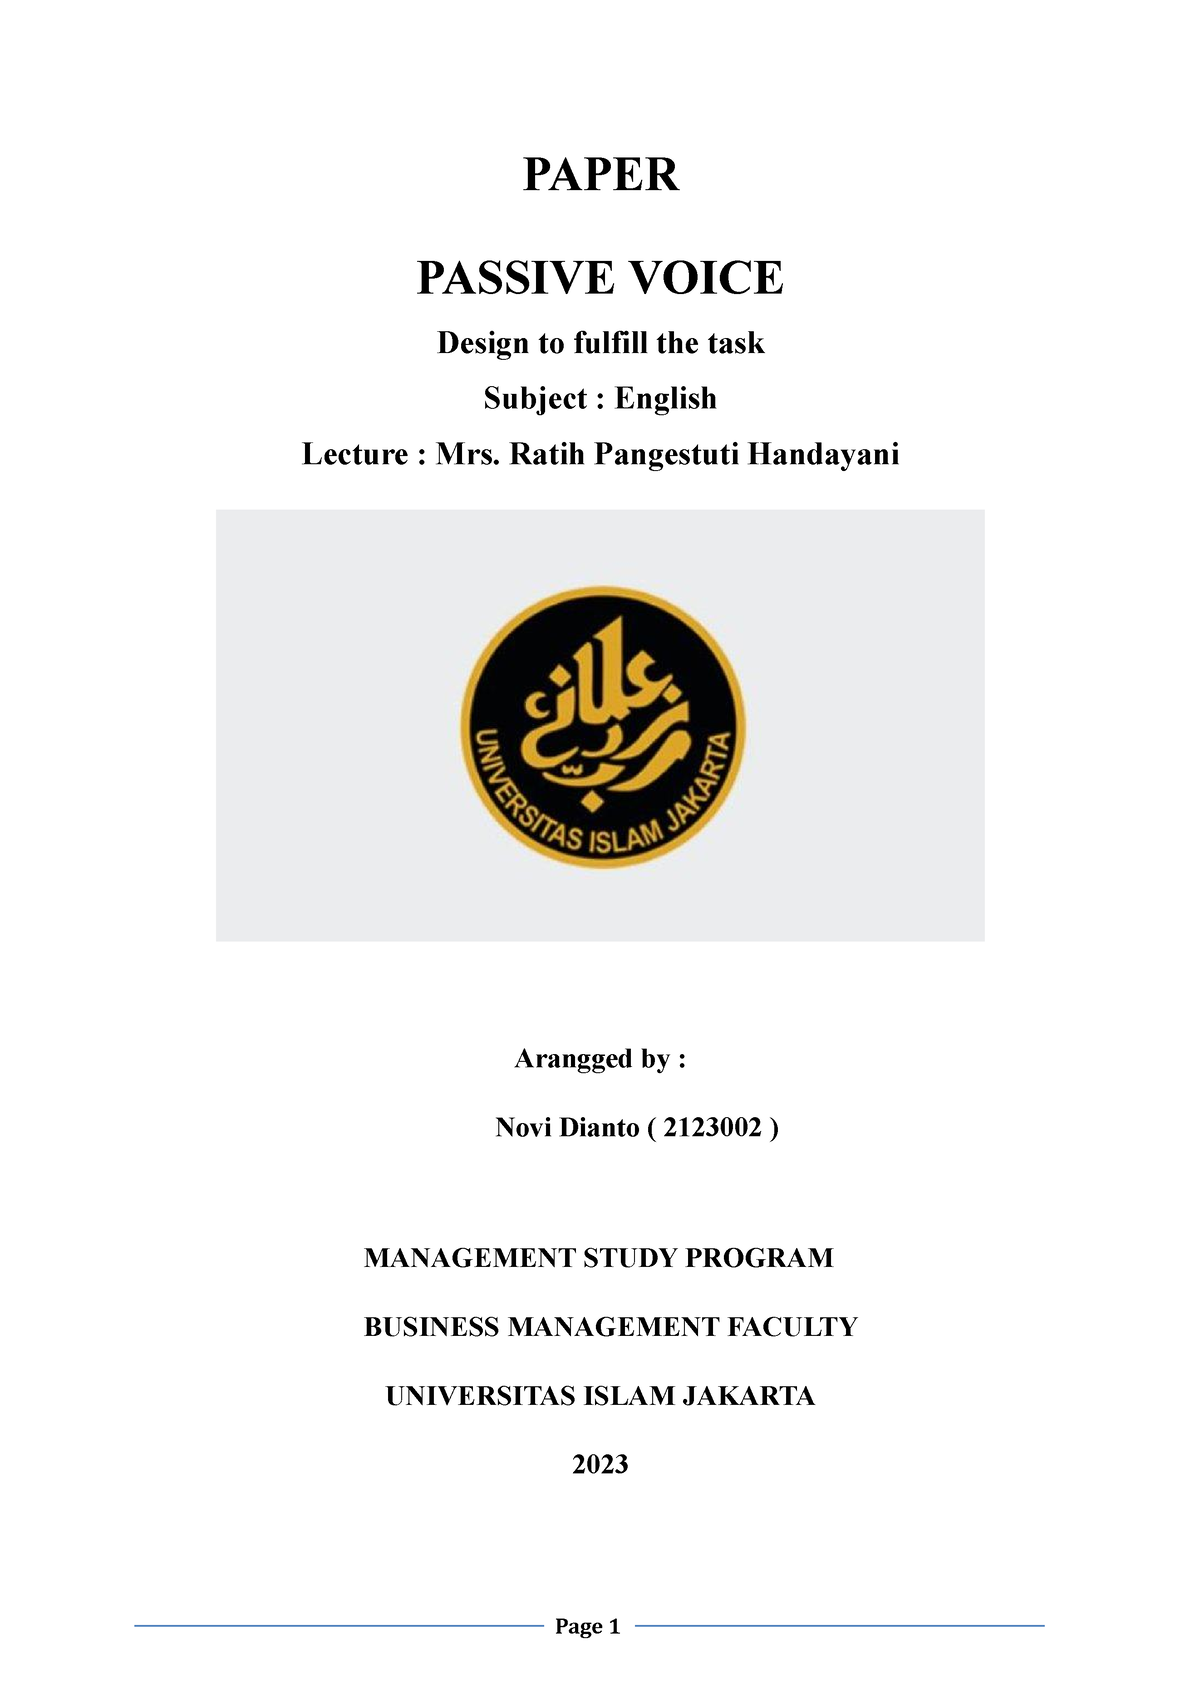 apa paper passive voice